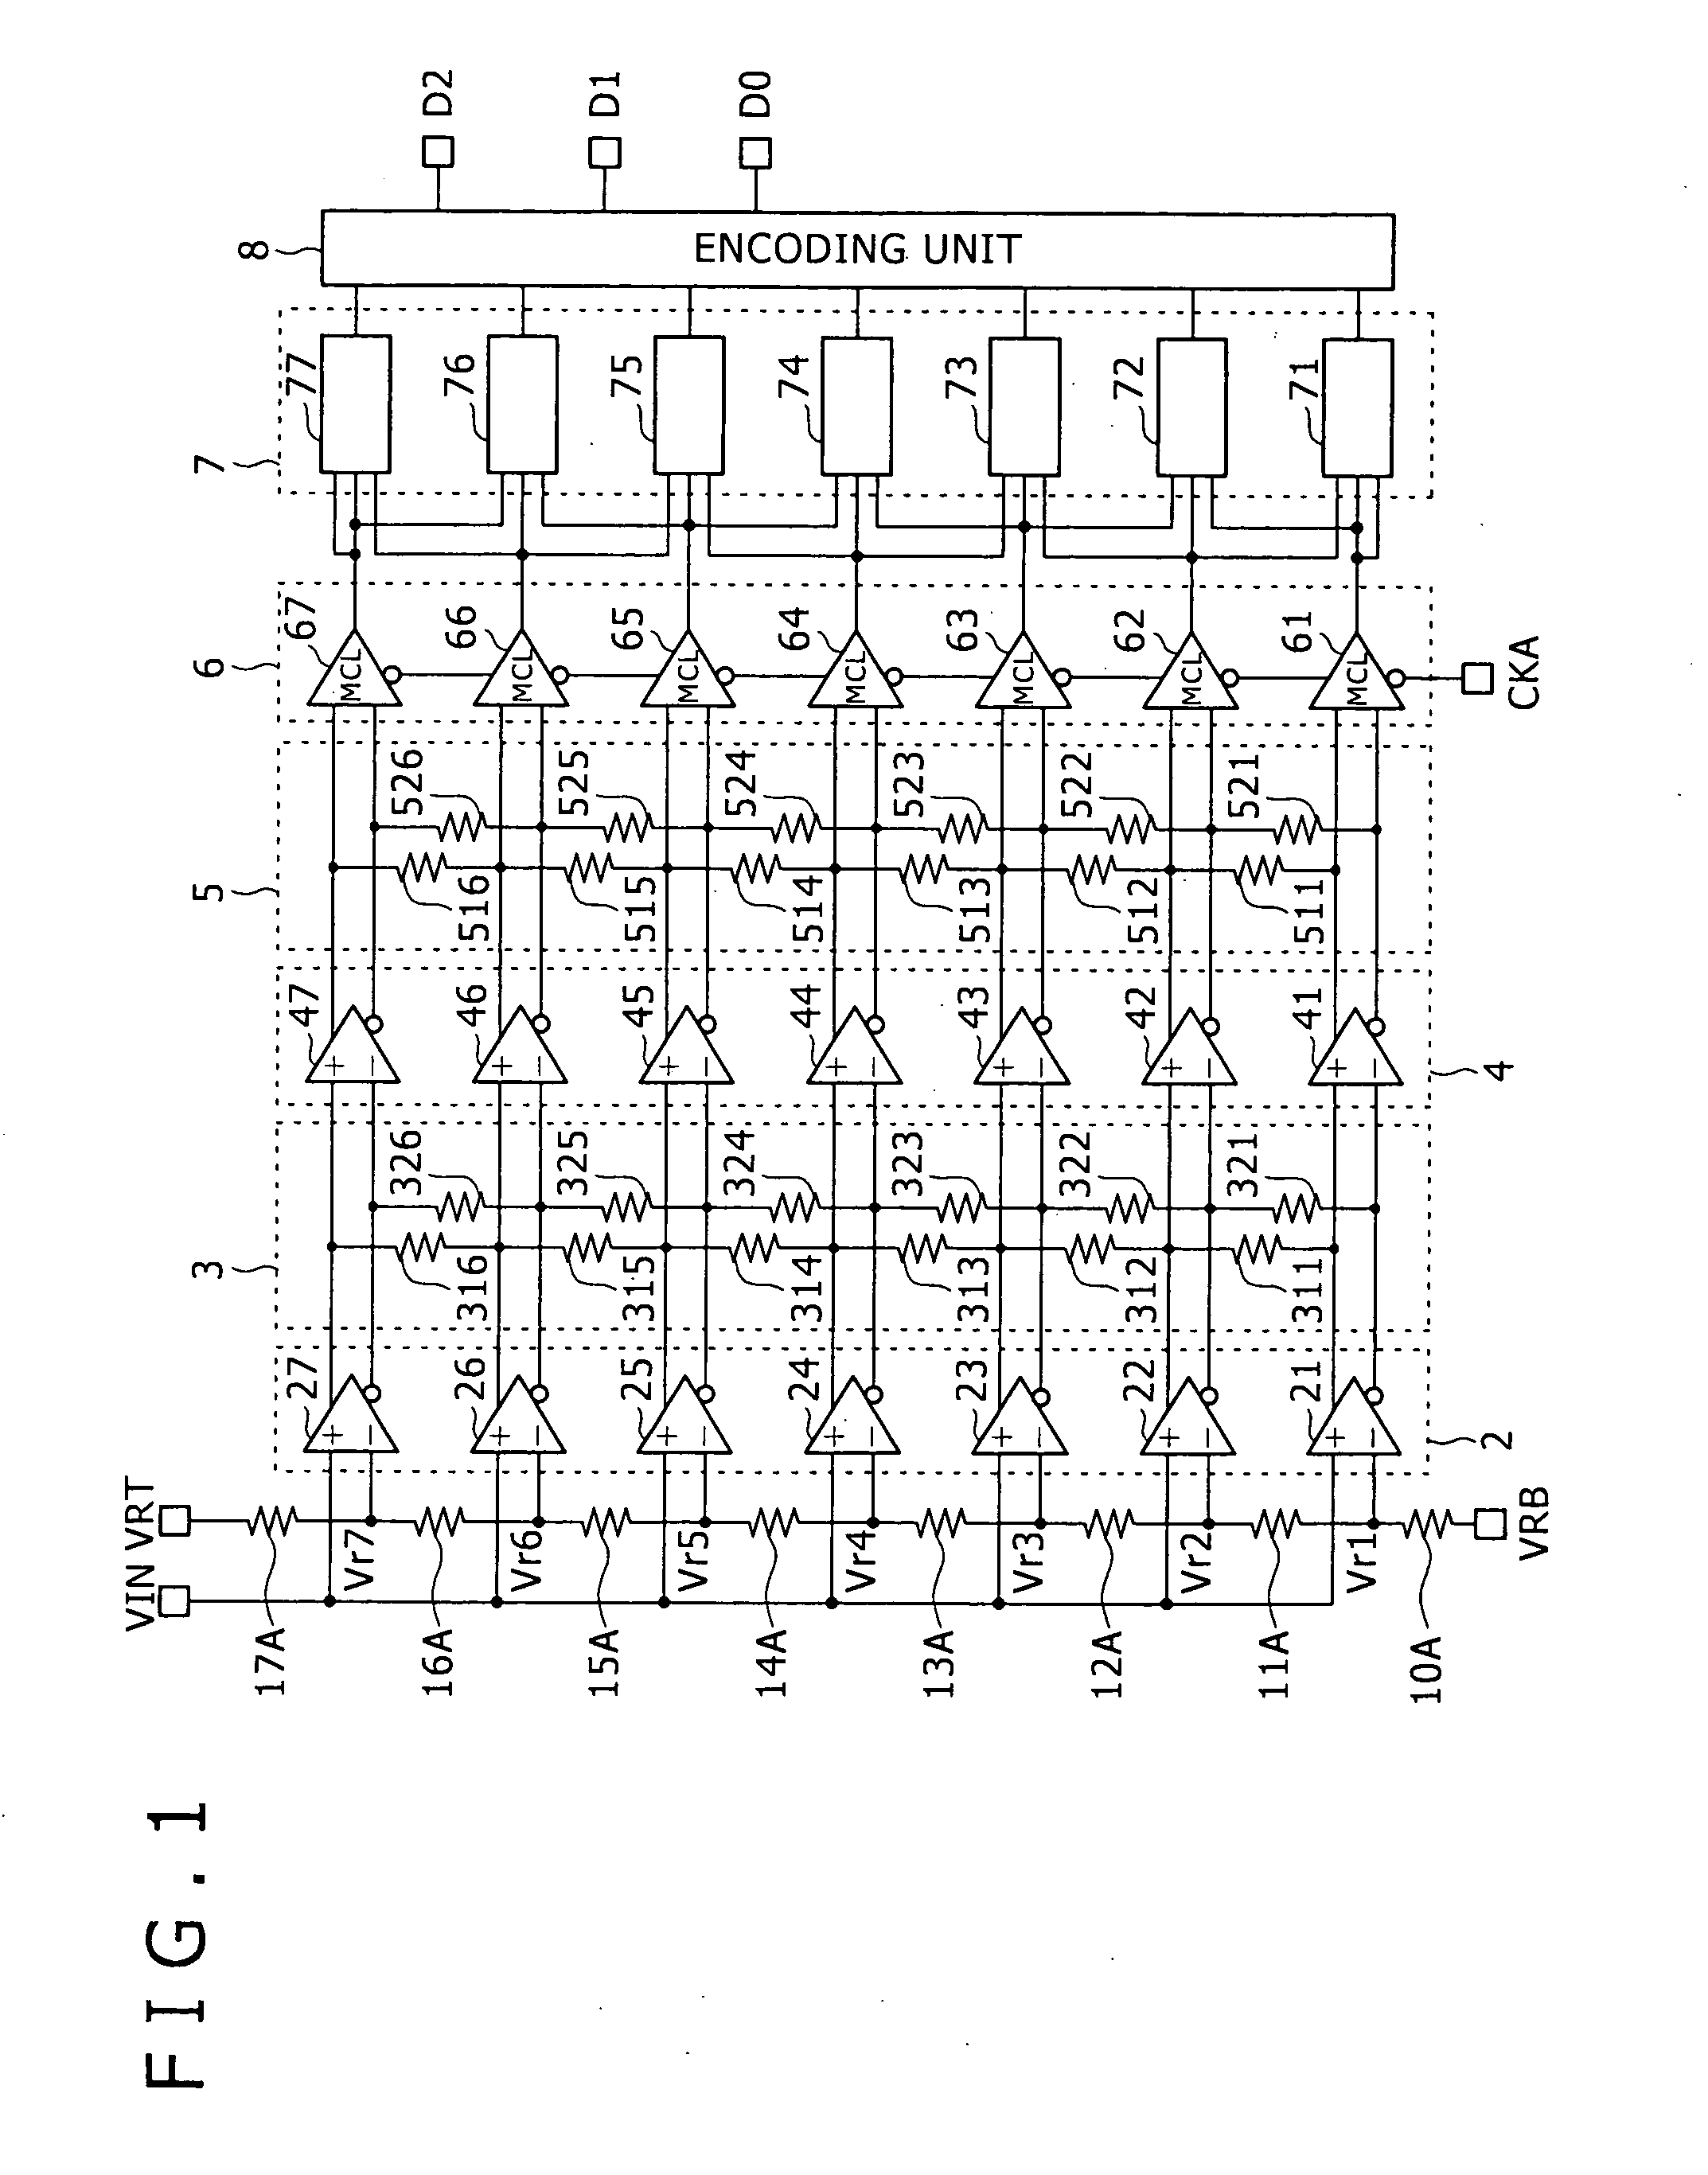 Analog-to-digital conversion circuit